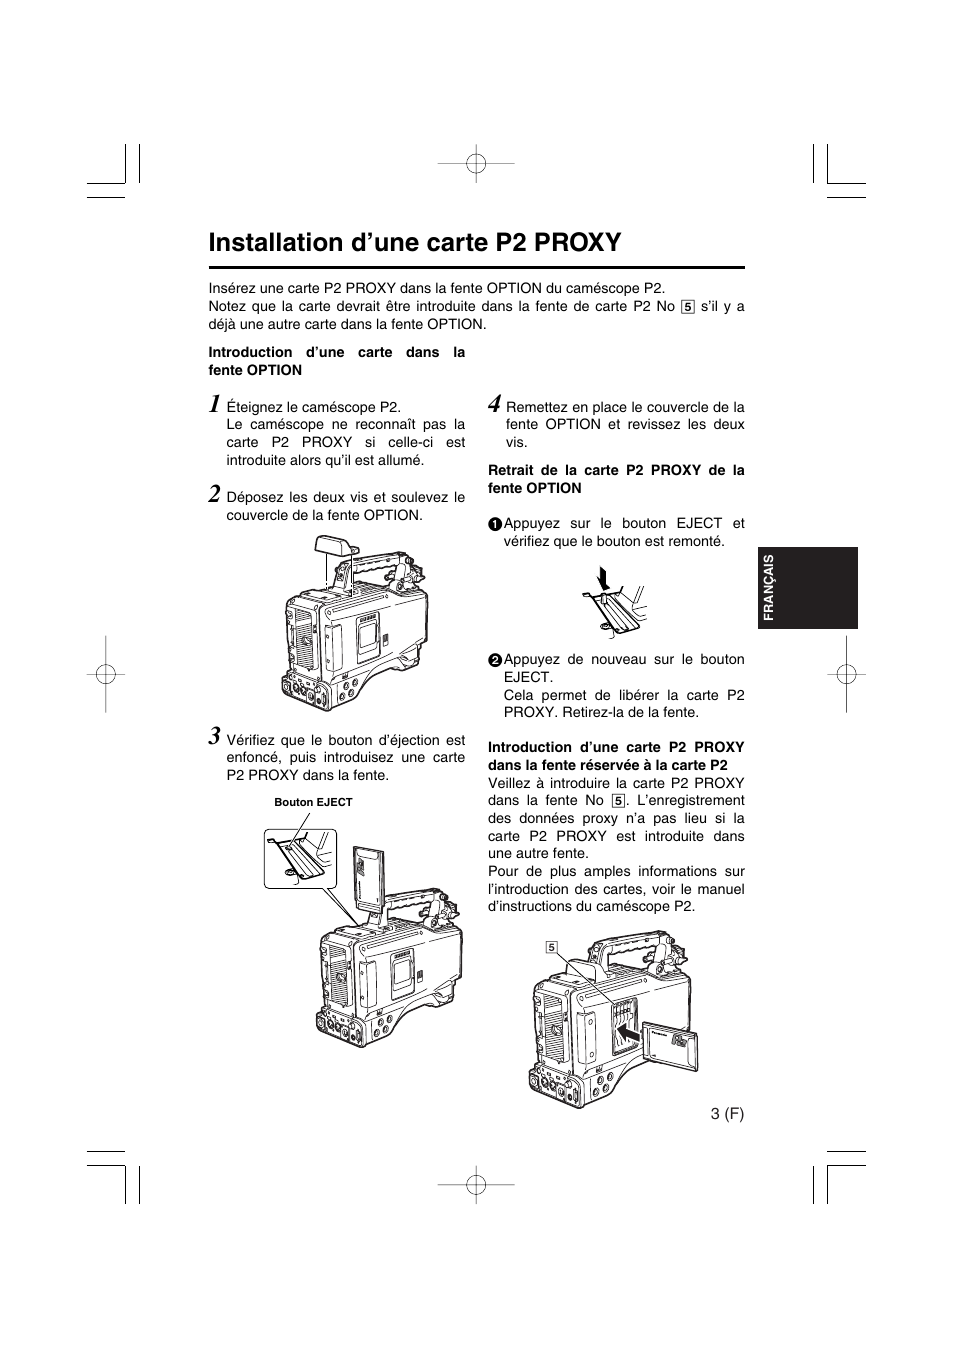 Installation d’une carte p2 proxy | Panasonic AJ-YAX800 User Manual | Page 31 / 104